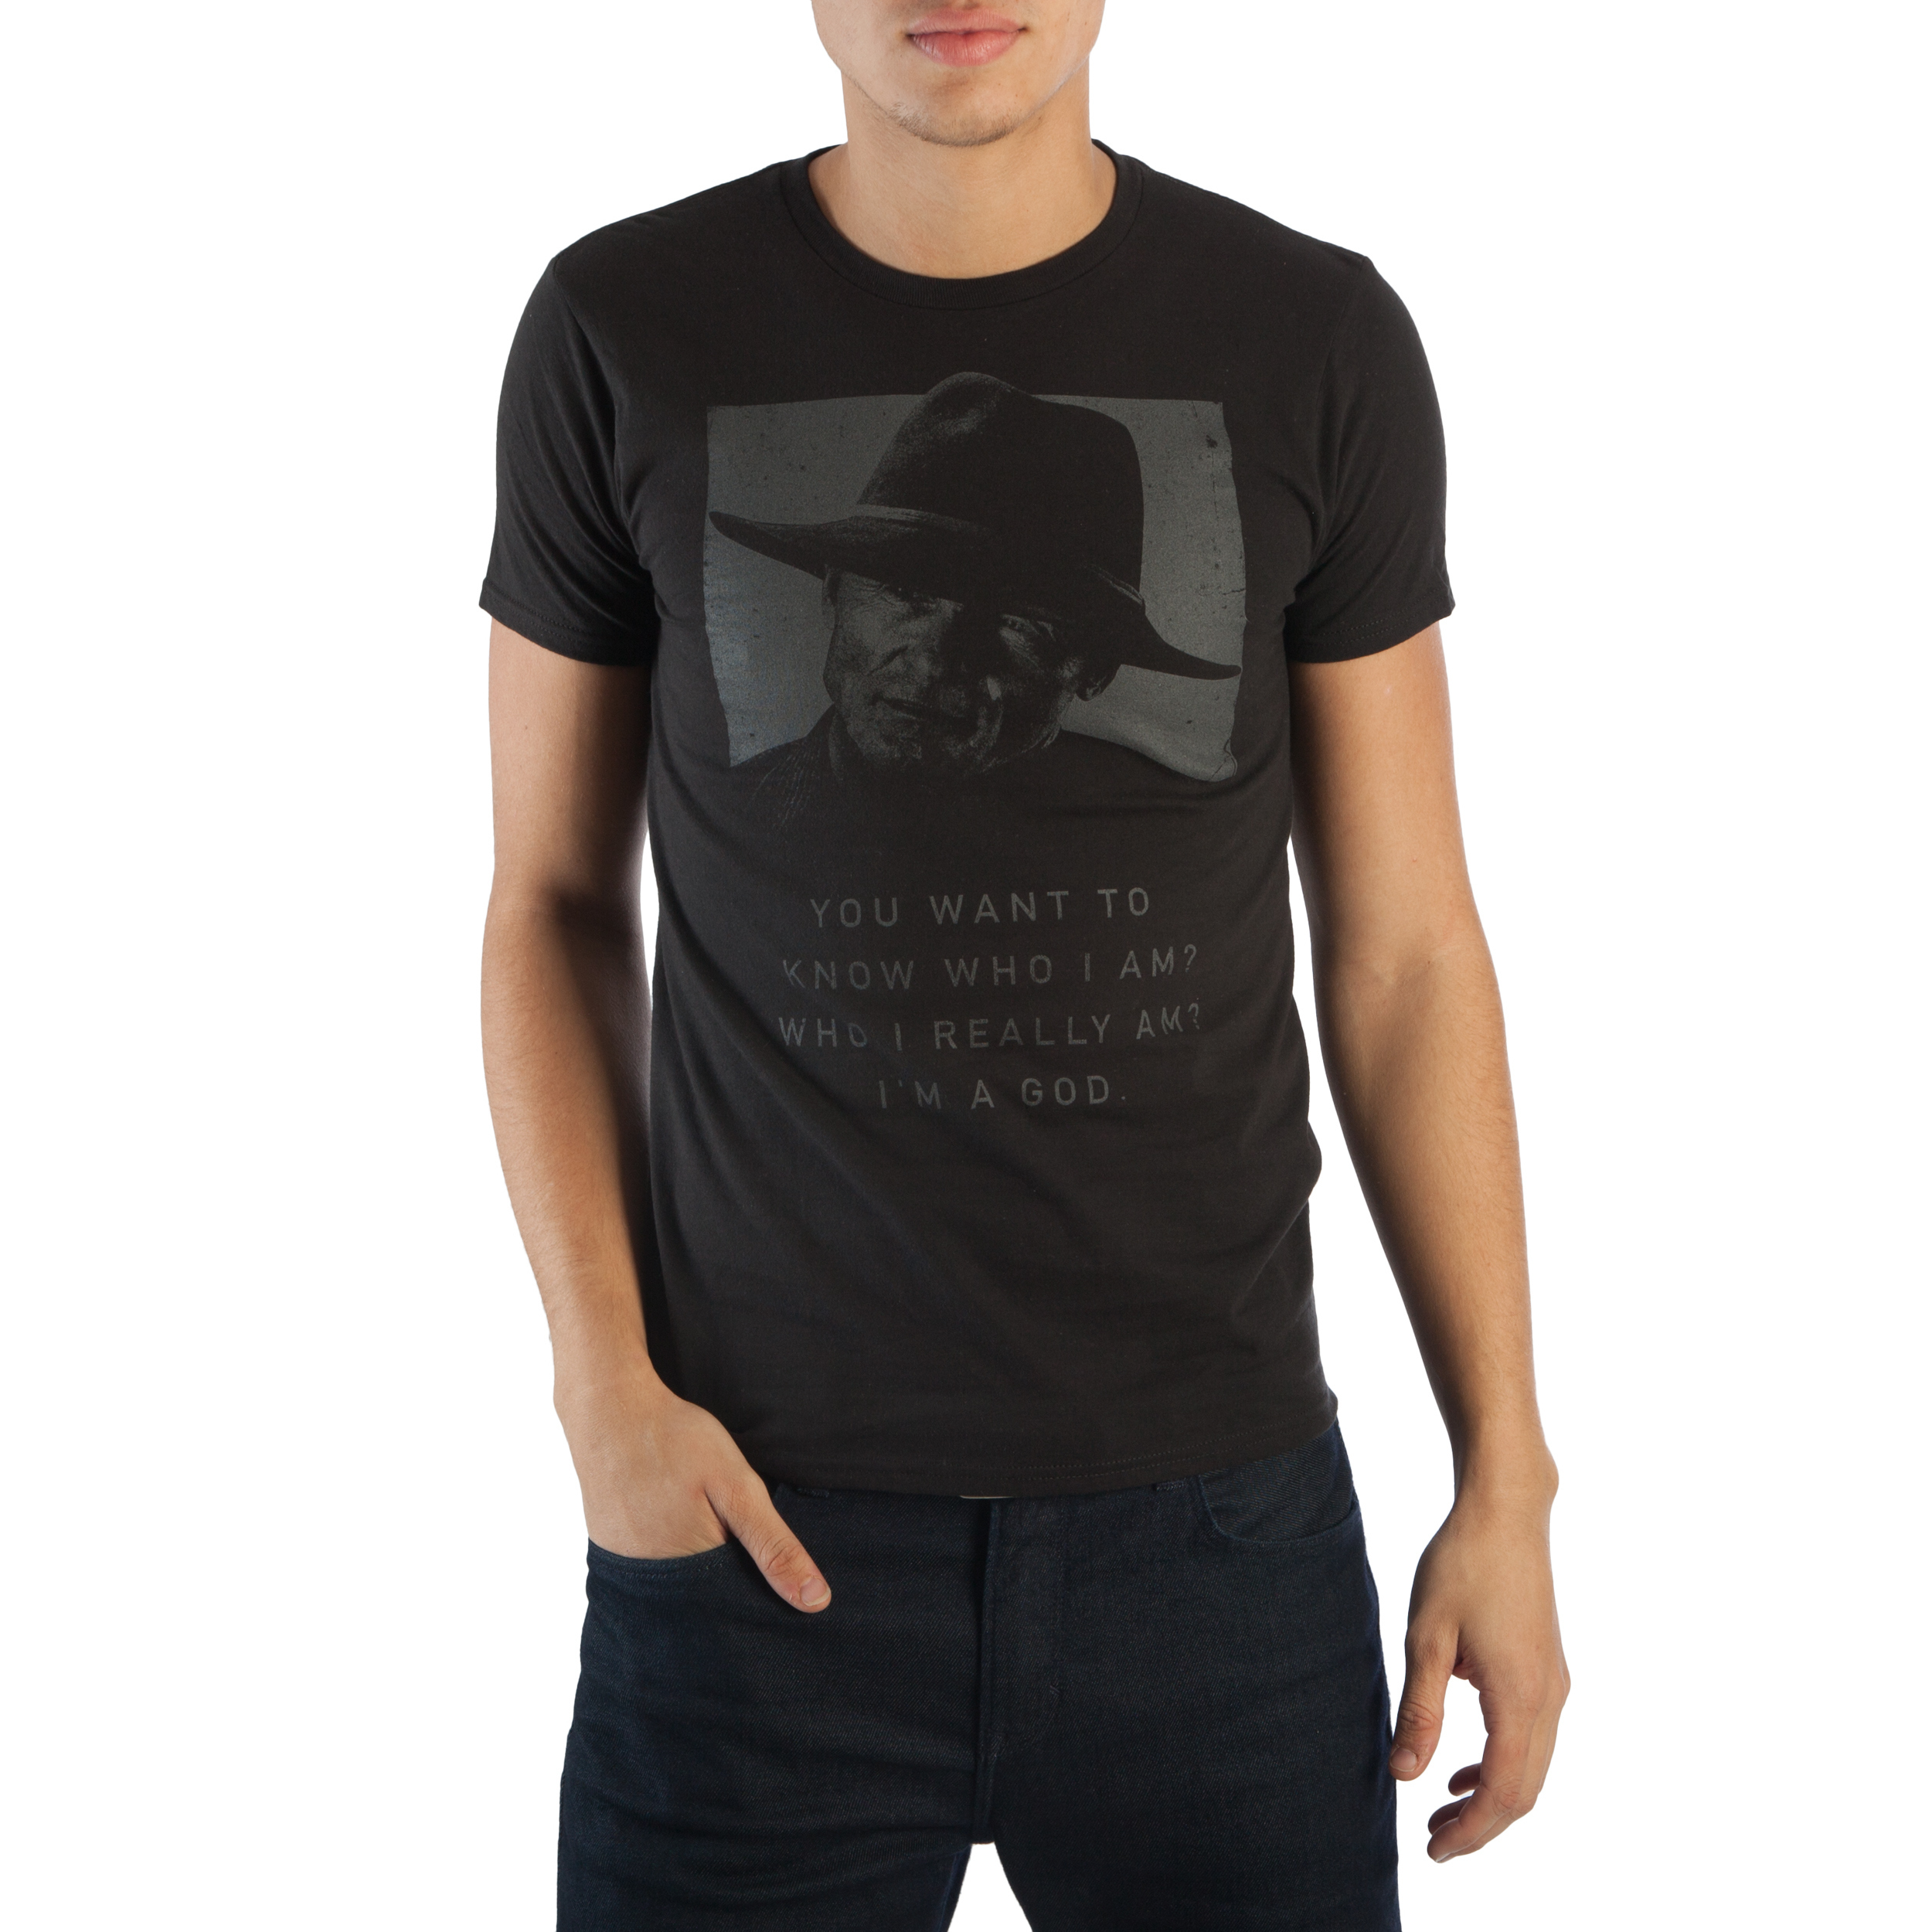 WestWorld Man In Black Ed Harris You Want To Know Who I Am' Who I Really Am' I'm A God. Men's Black T-Shirt-Medium - image 2 of 2